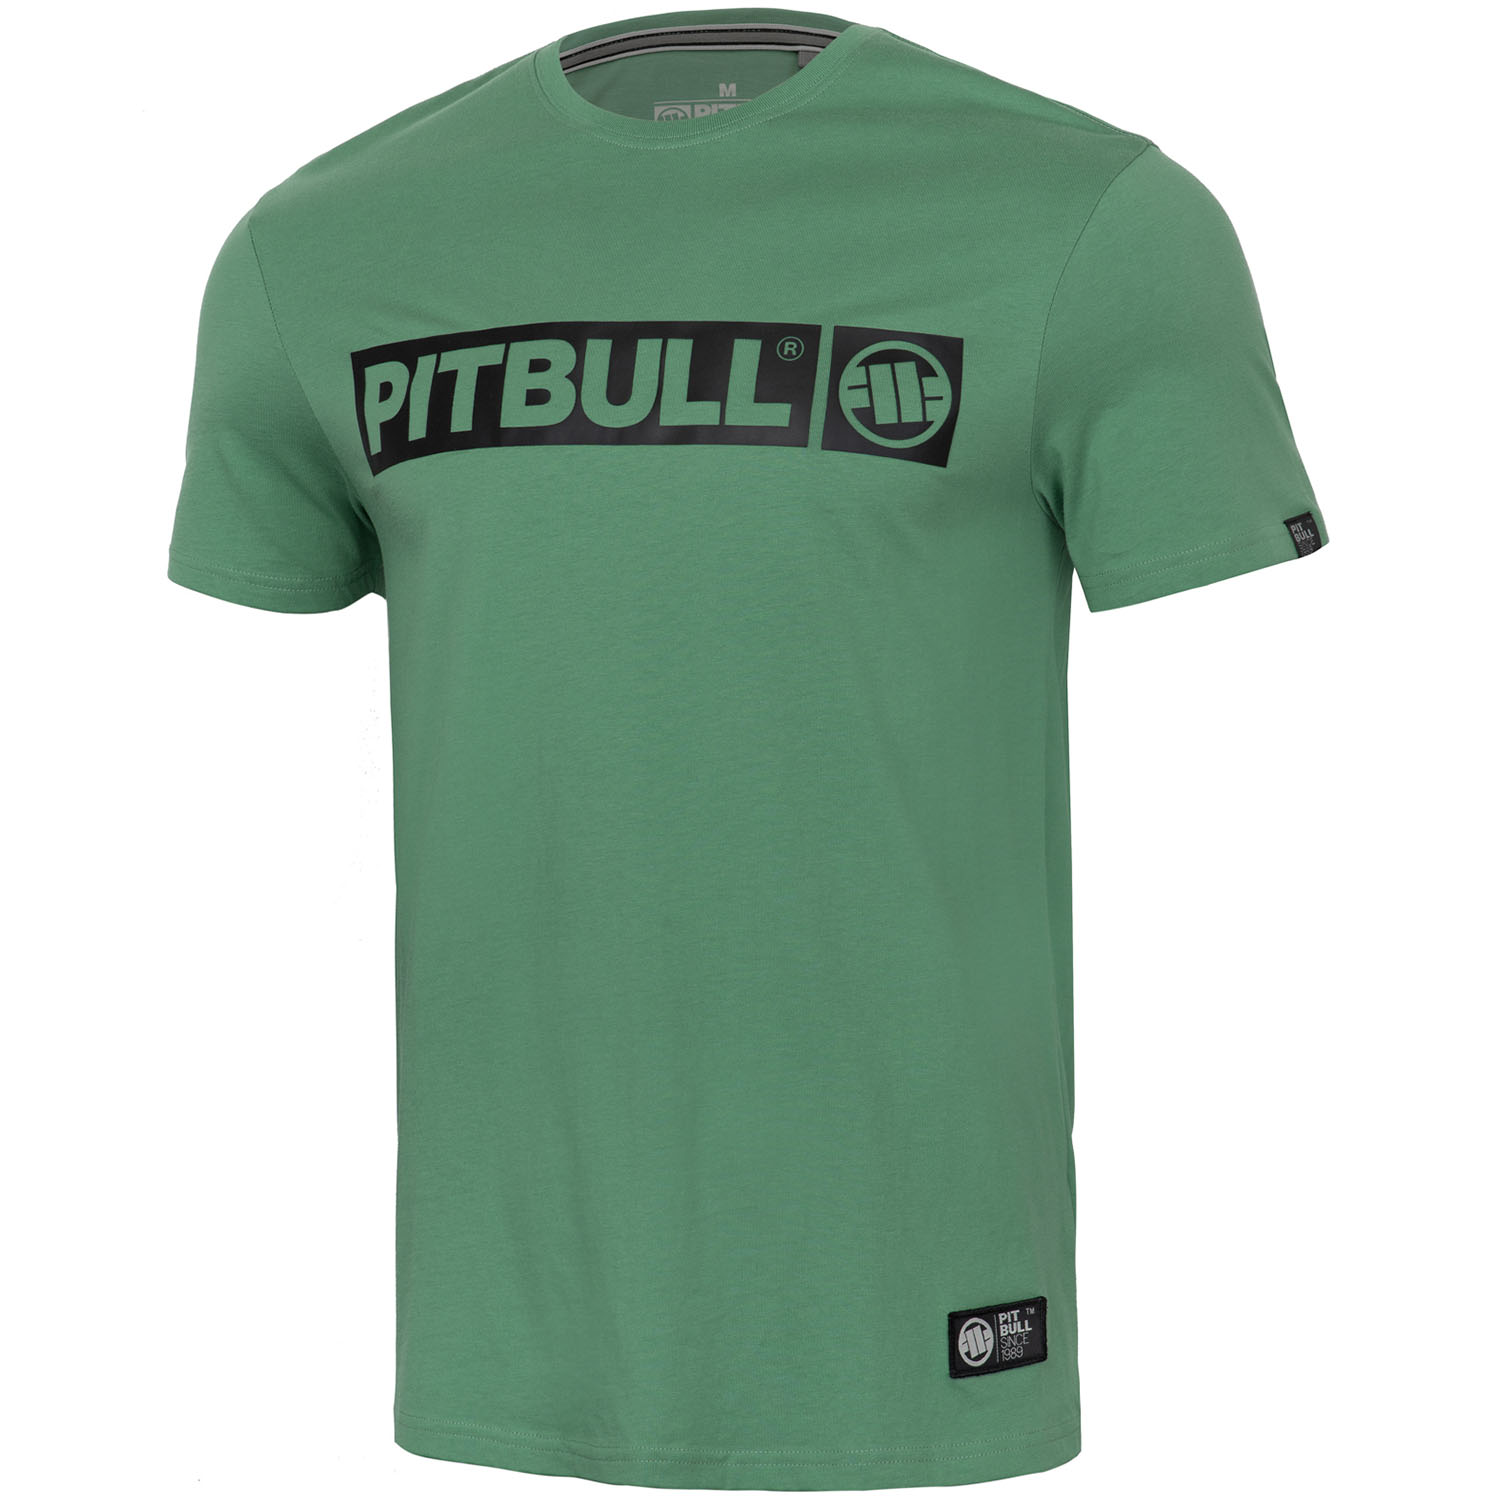 Pit Bull West Coast T-Shirt, Hilltop S70, grün